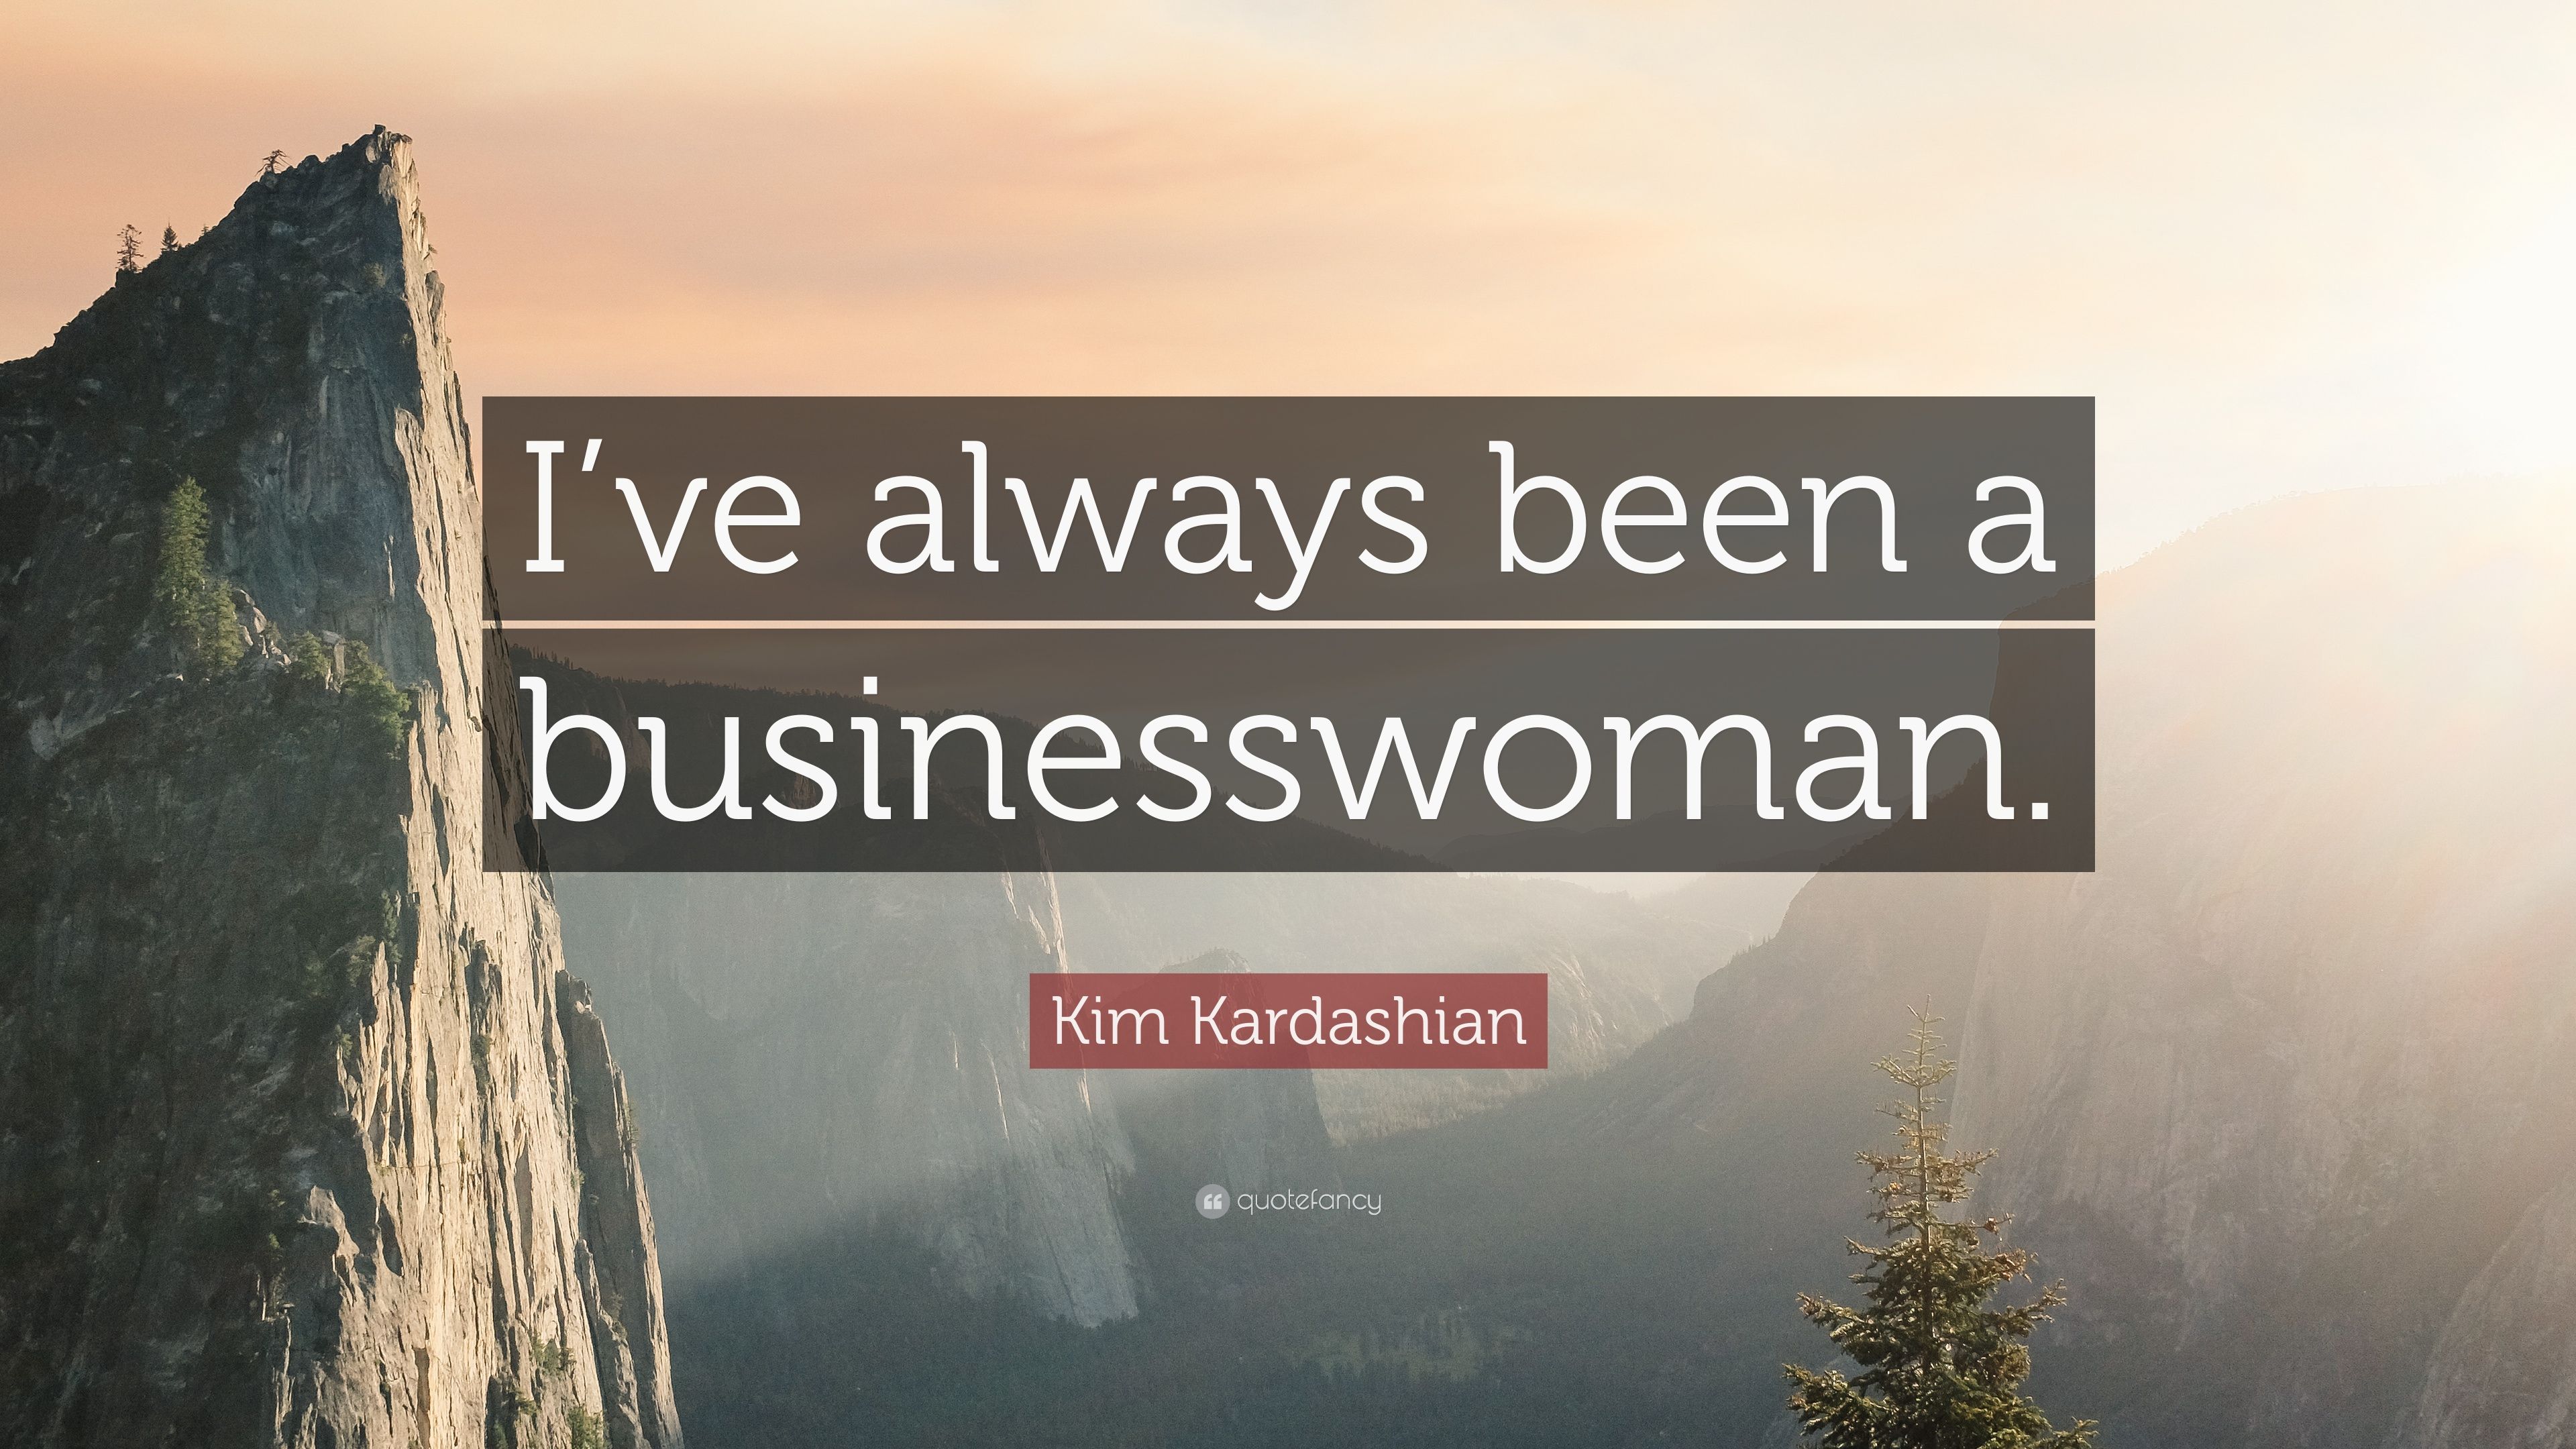 Kim Kardashian Quote: “I've always been a businesswoman.” (7 wallpaper)